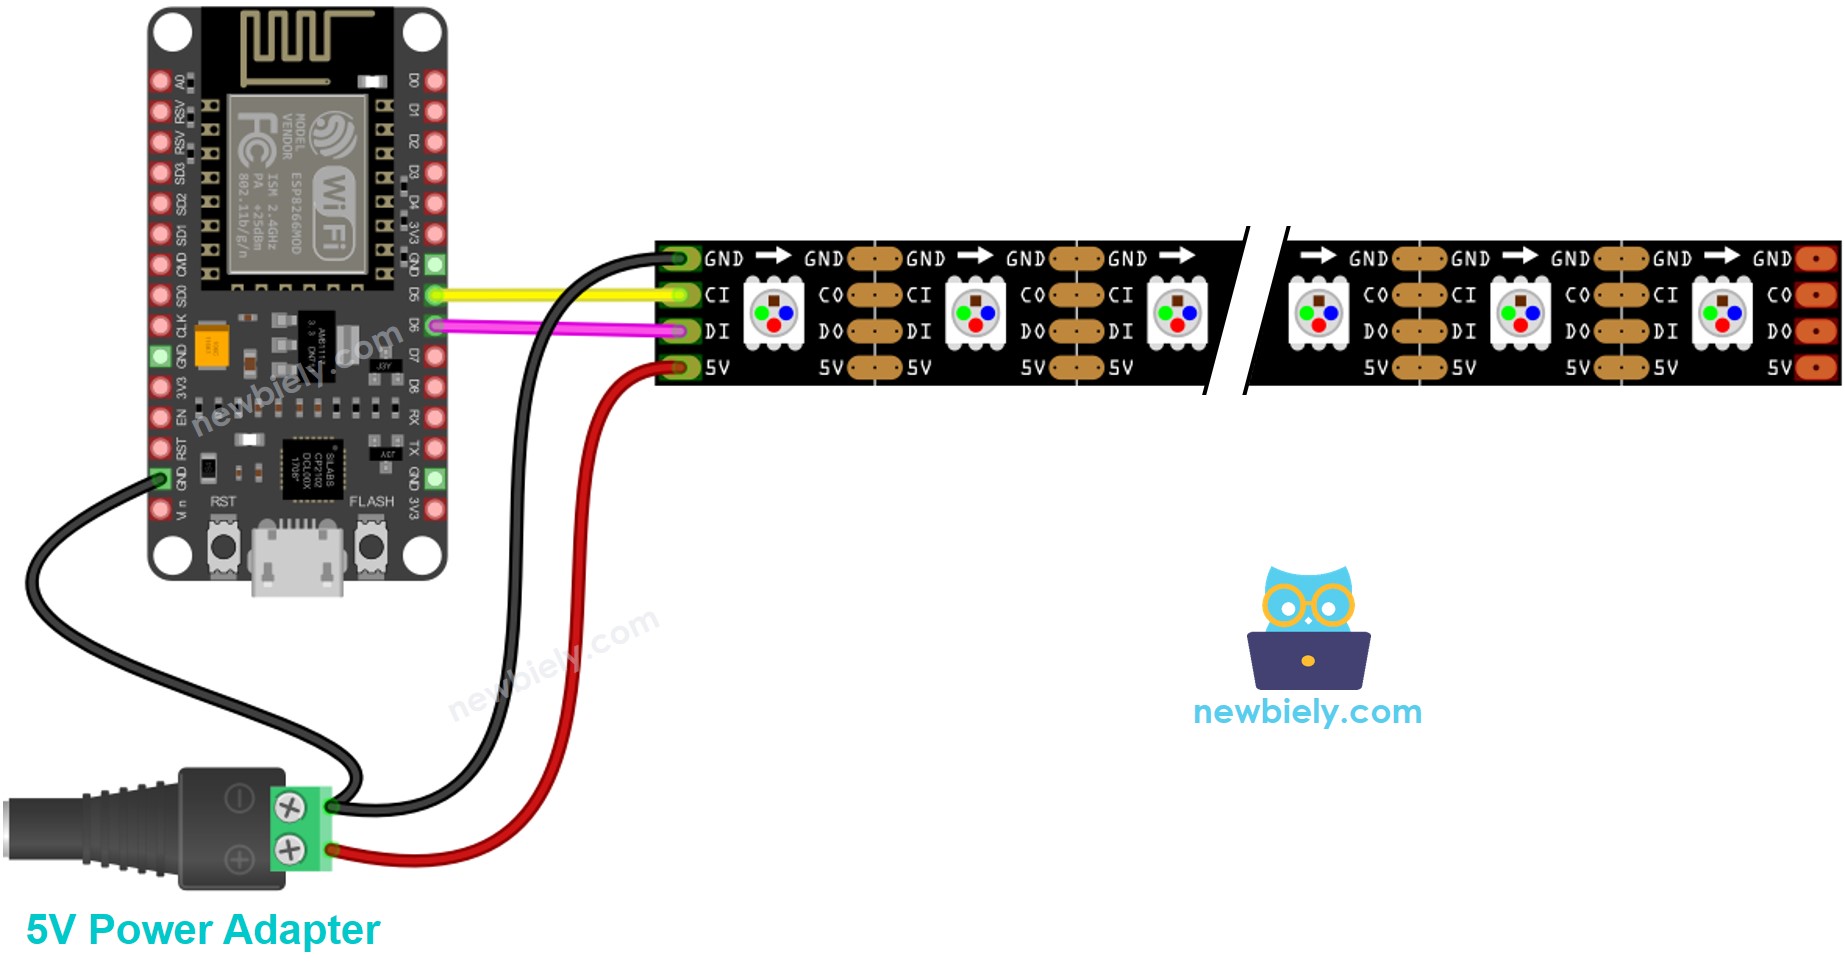 The wiring diagram between ESP8266 NodeMCU and DotStar RGB LED strip